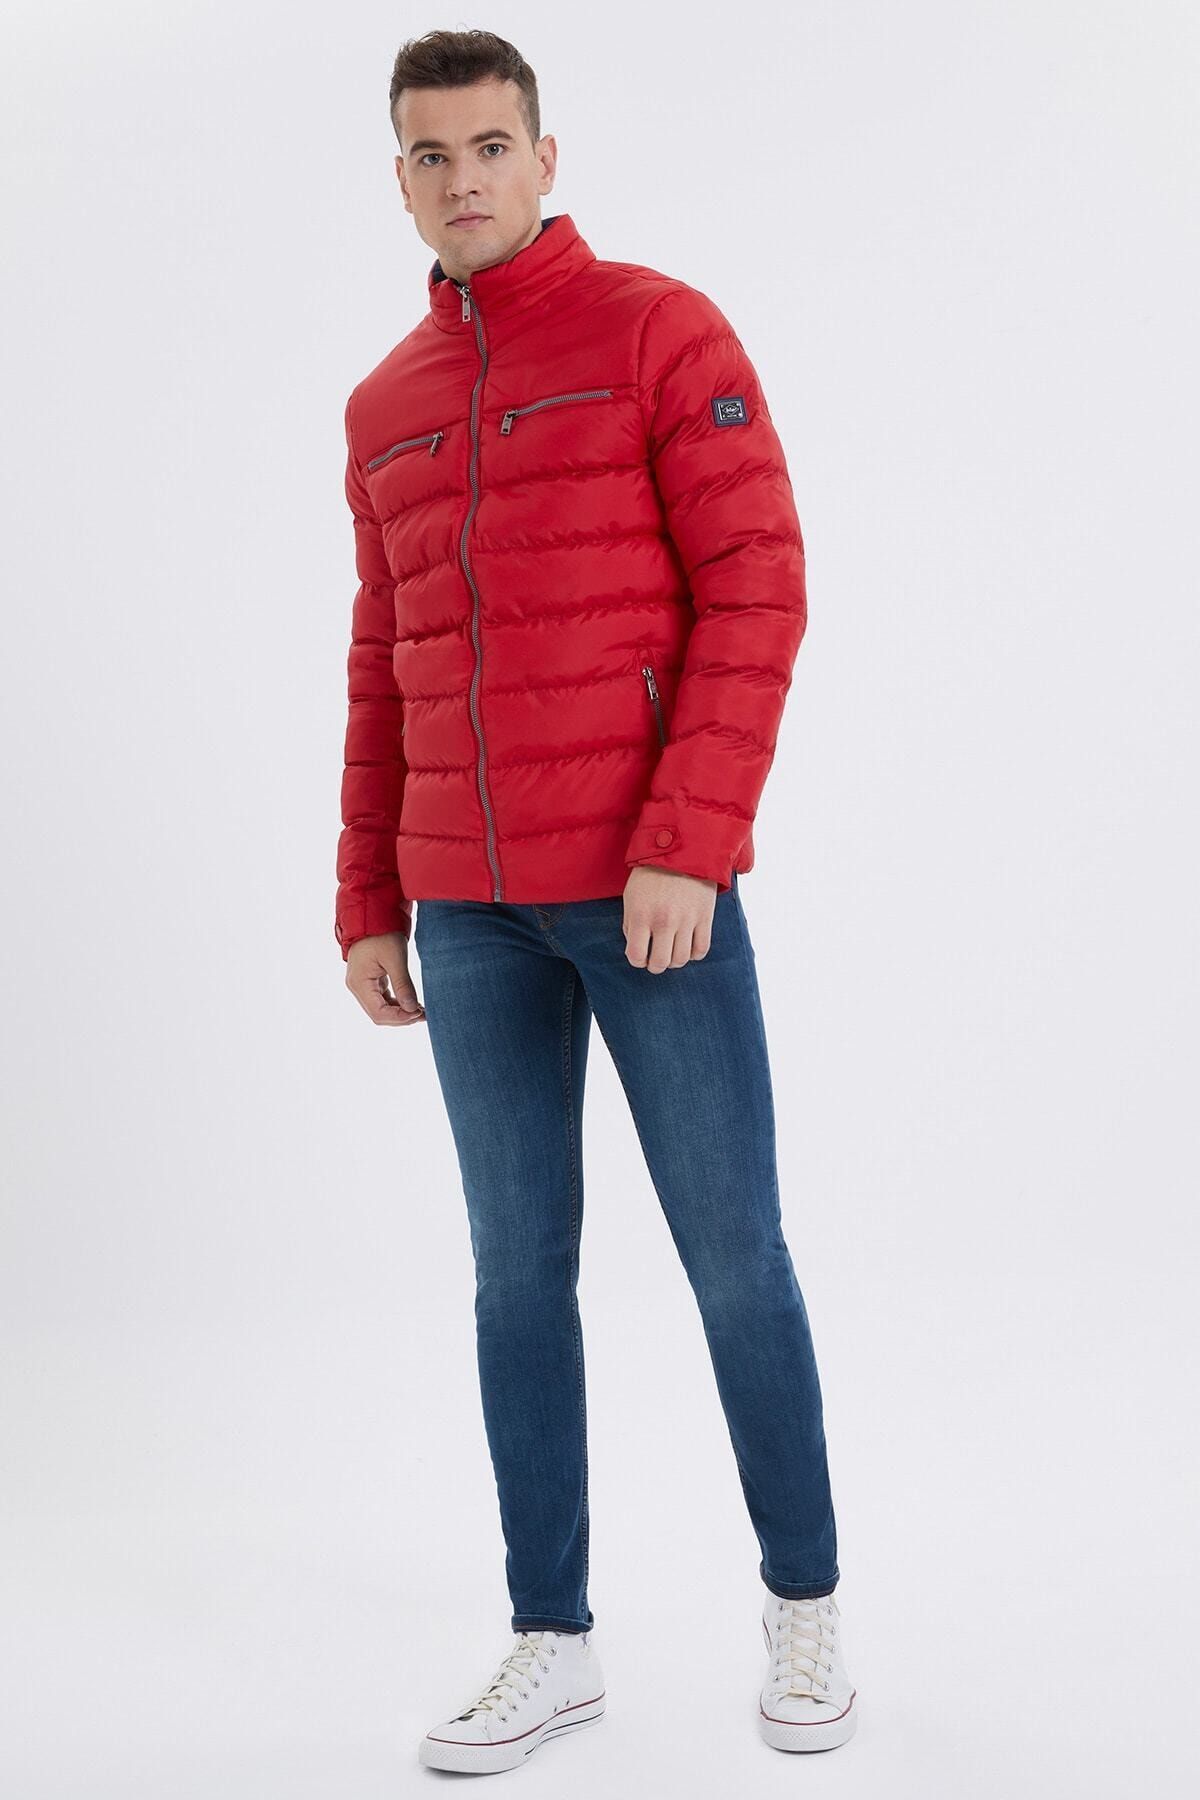 Lee Cooper Winter Jacket - Khaki - Trendyol